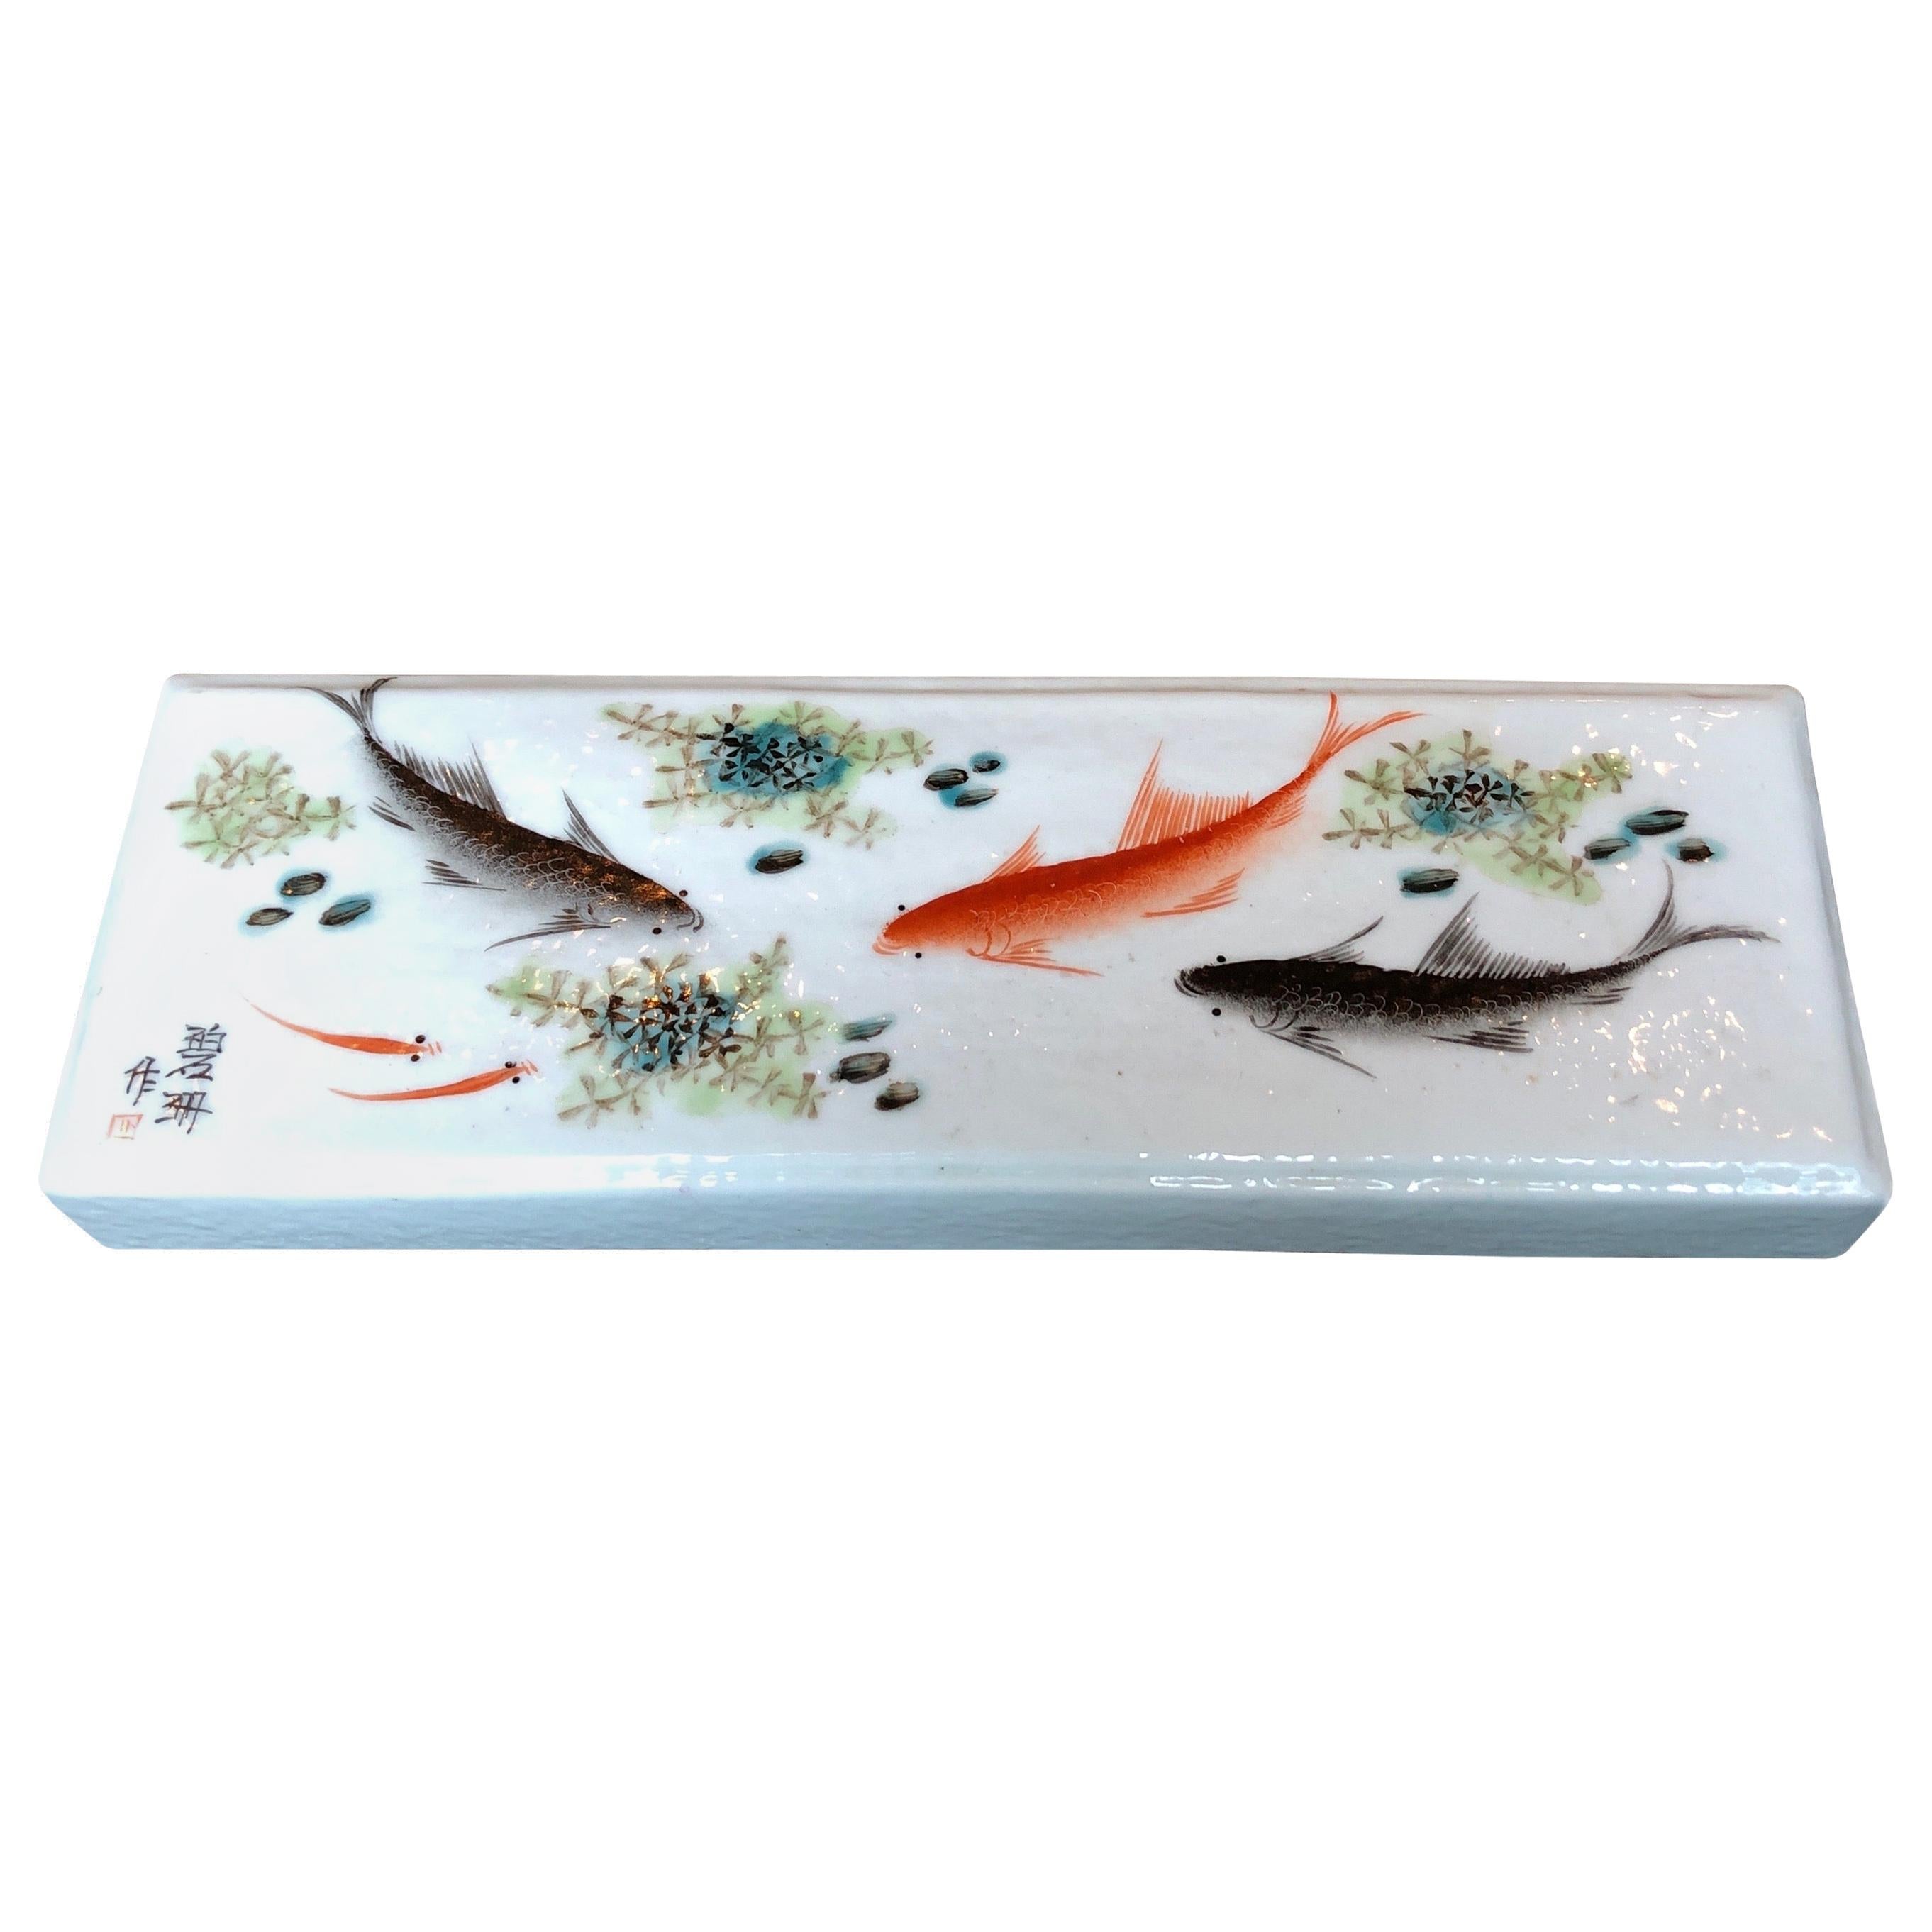 Porcelain Brush Rest with Vivid Fish Images For Sale